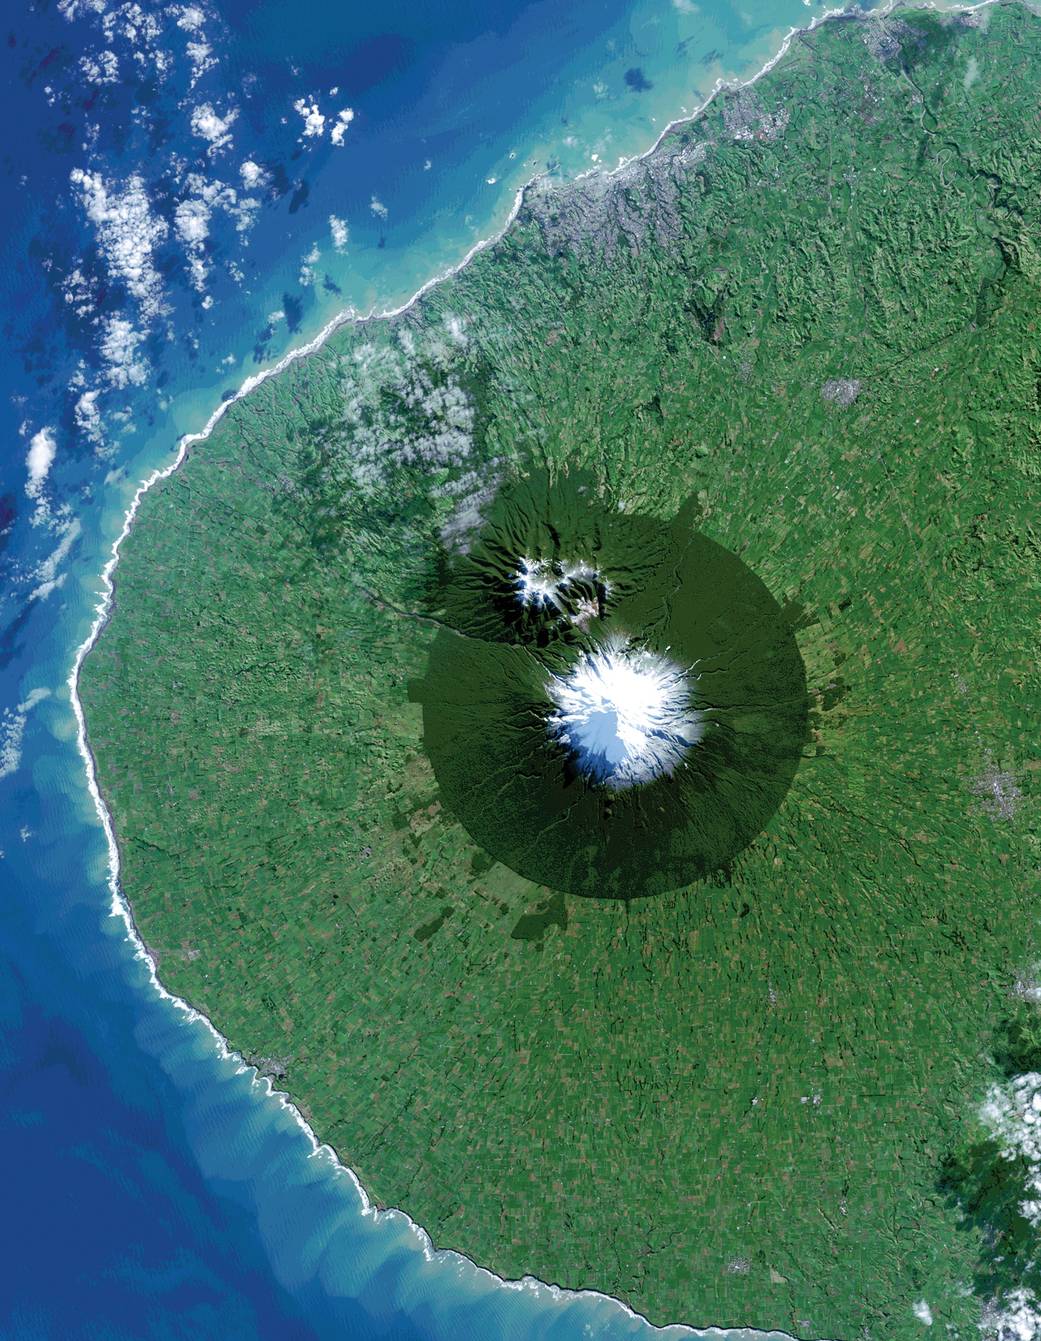 View of New Zealand taken by Landsat satellite